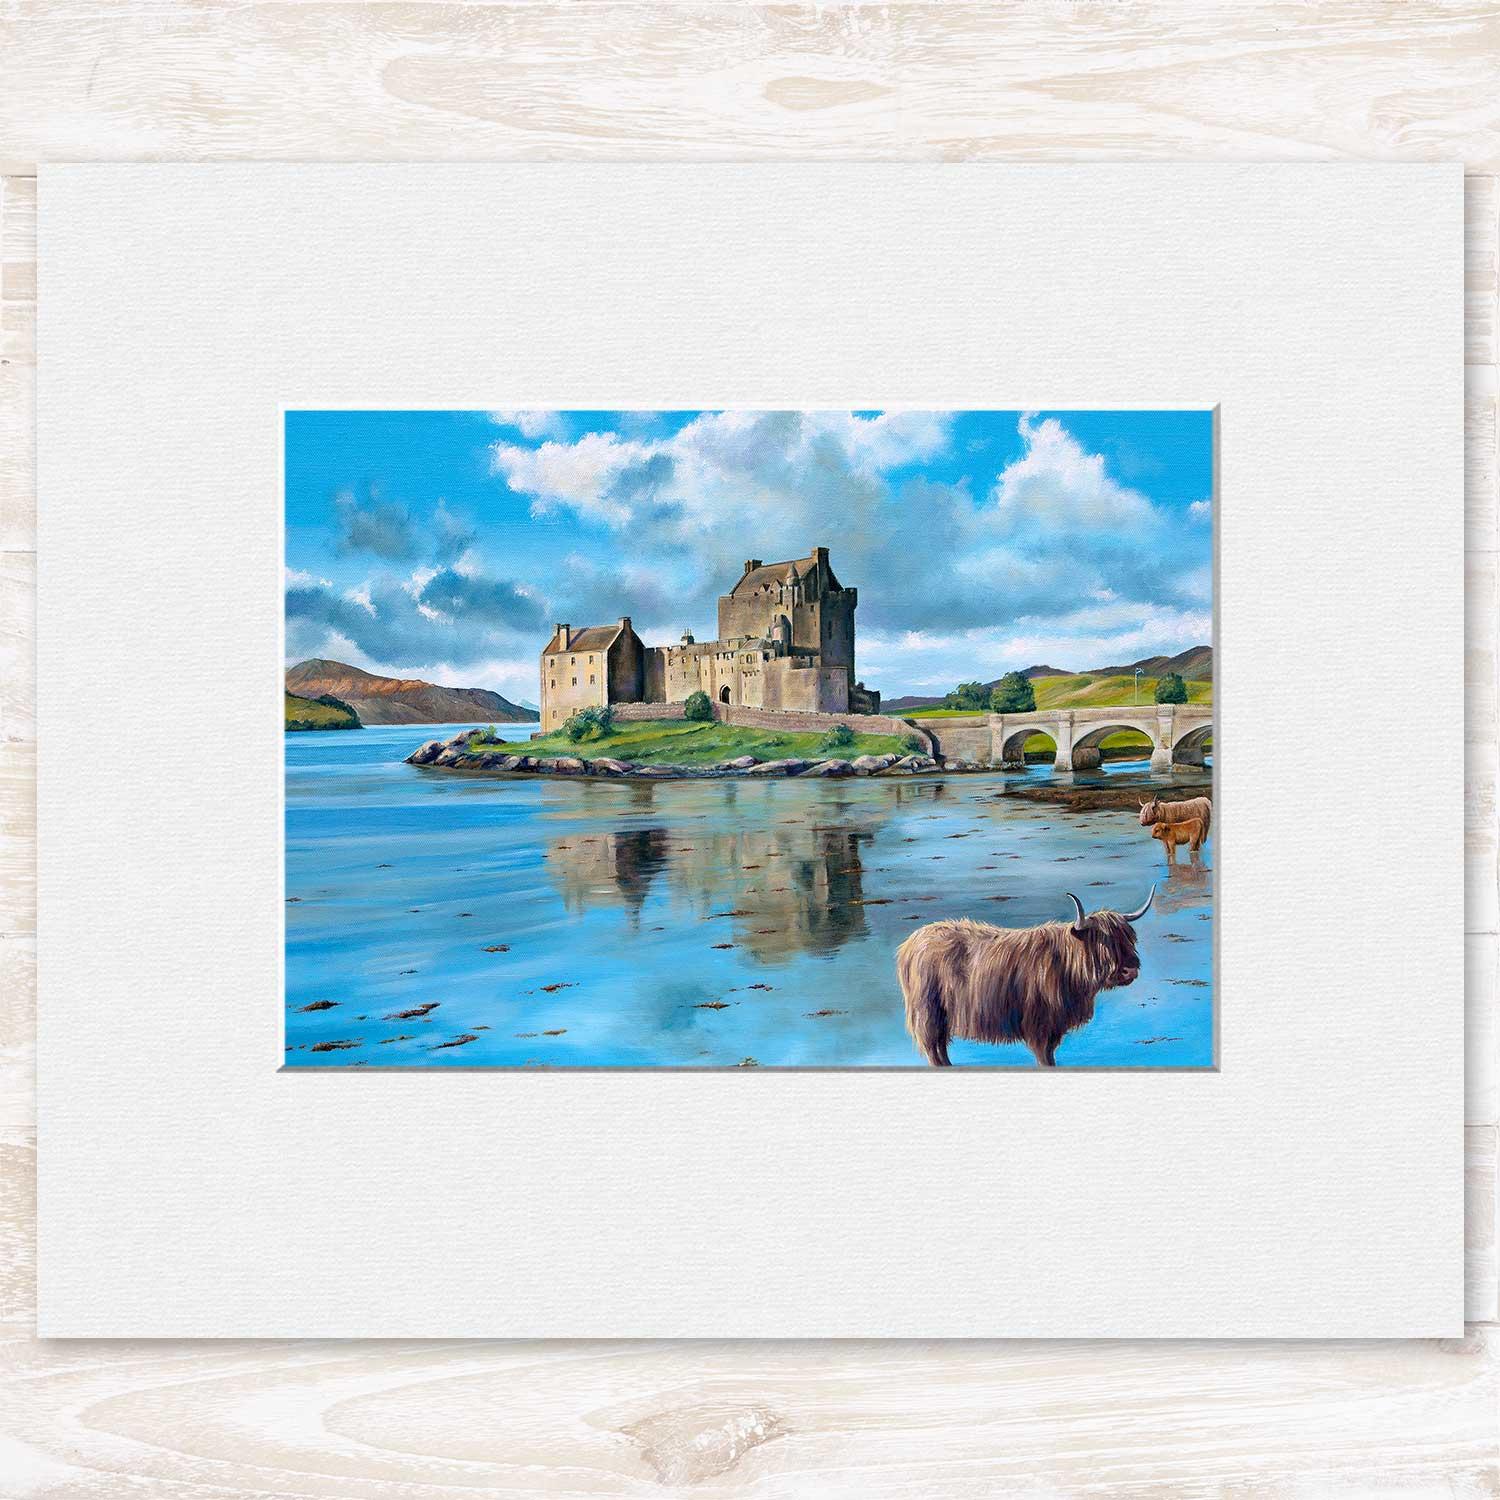 Eilean Donan Castle Mounted Card from an original painting by artist Scott McGregor